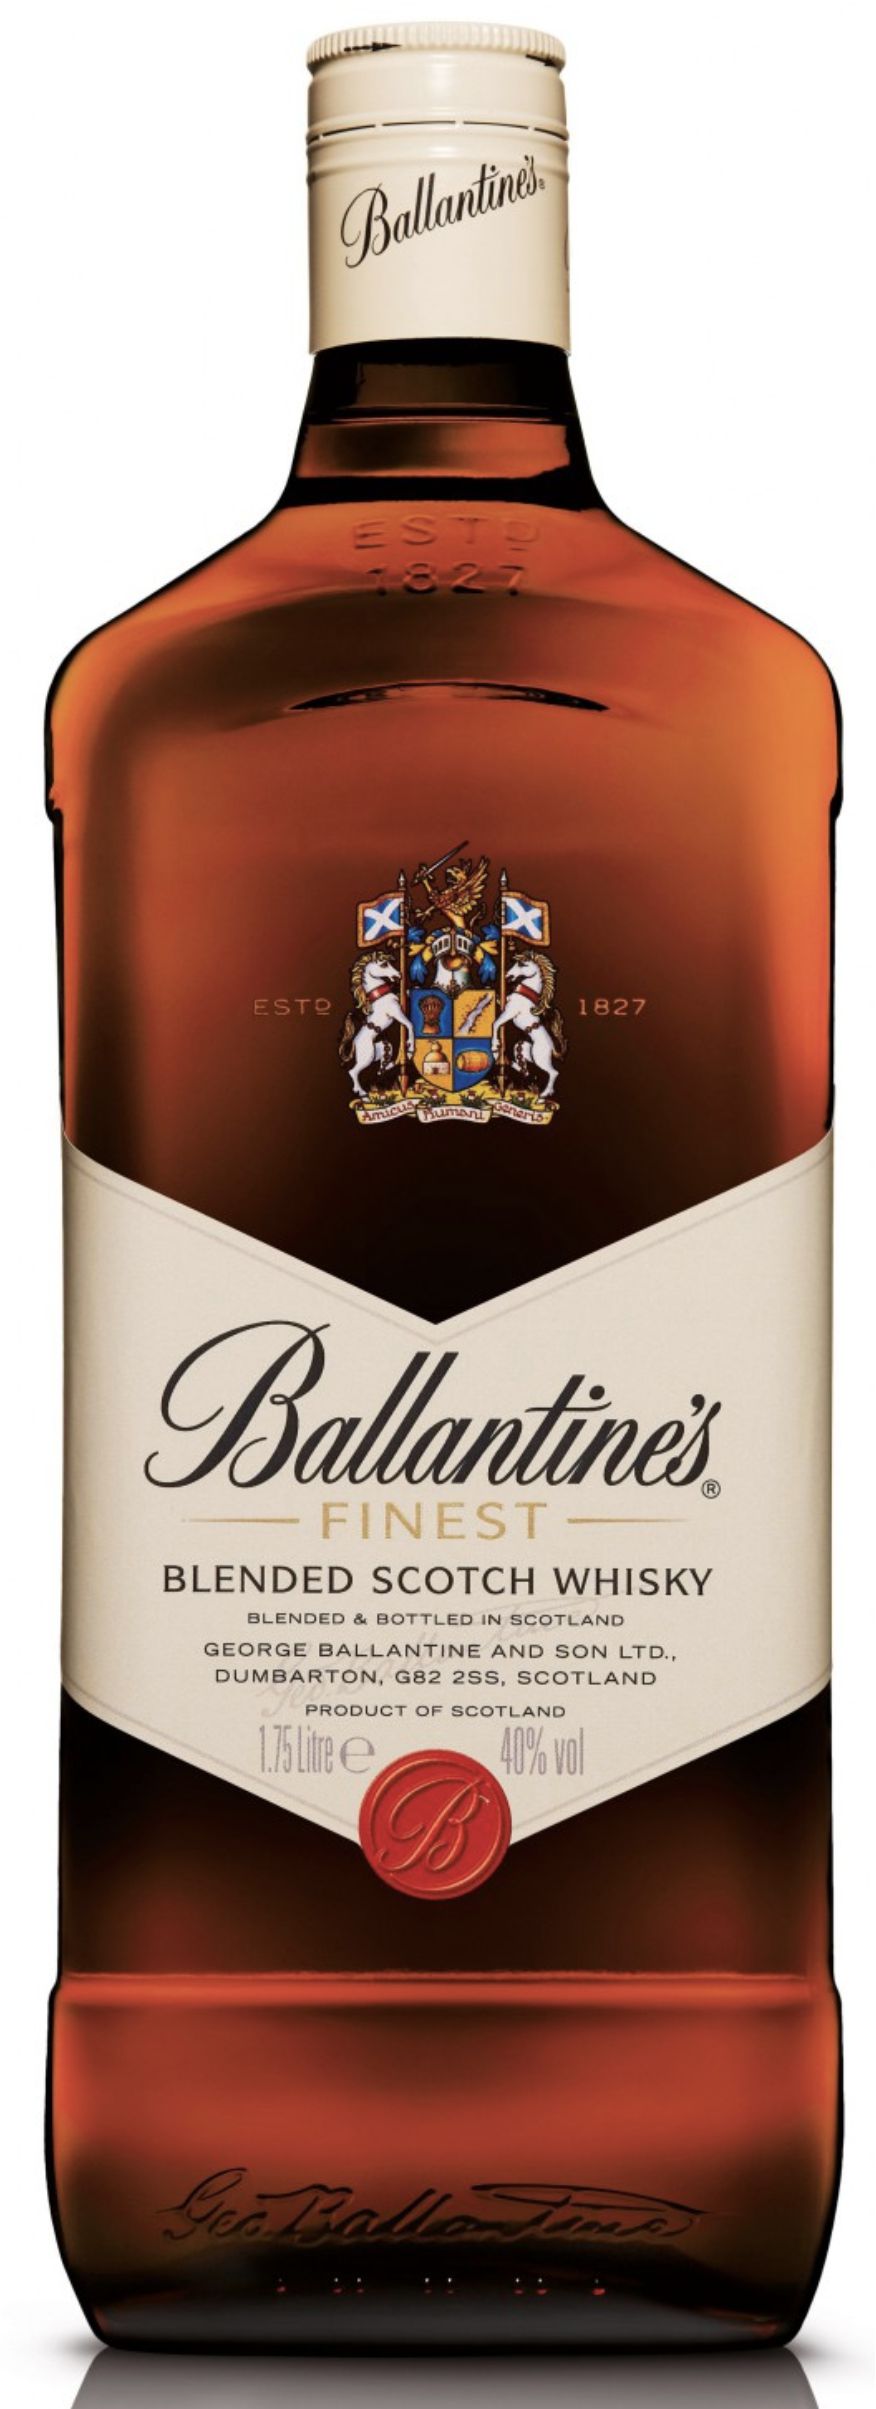 Баллантинес. Виски Шотландия Баллантайнс Файнест. Виски Баллантайнс Файнест 0.5 Великобритания. Виски Ballantine's Finest, 0.7 л. Виски шотландский купажированный Баллантайнс.